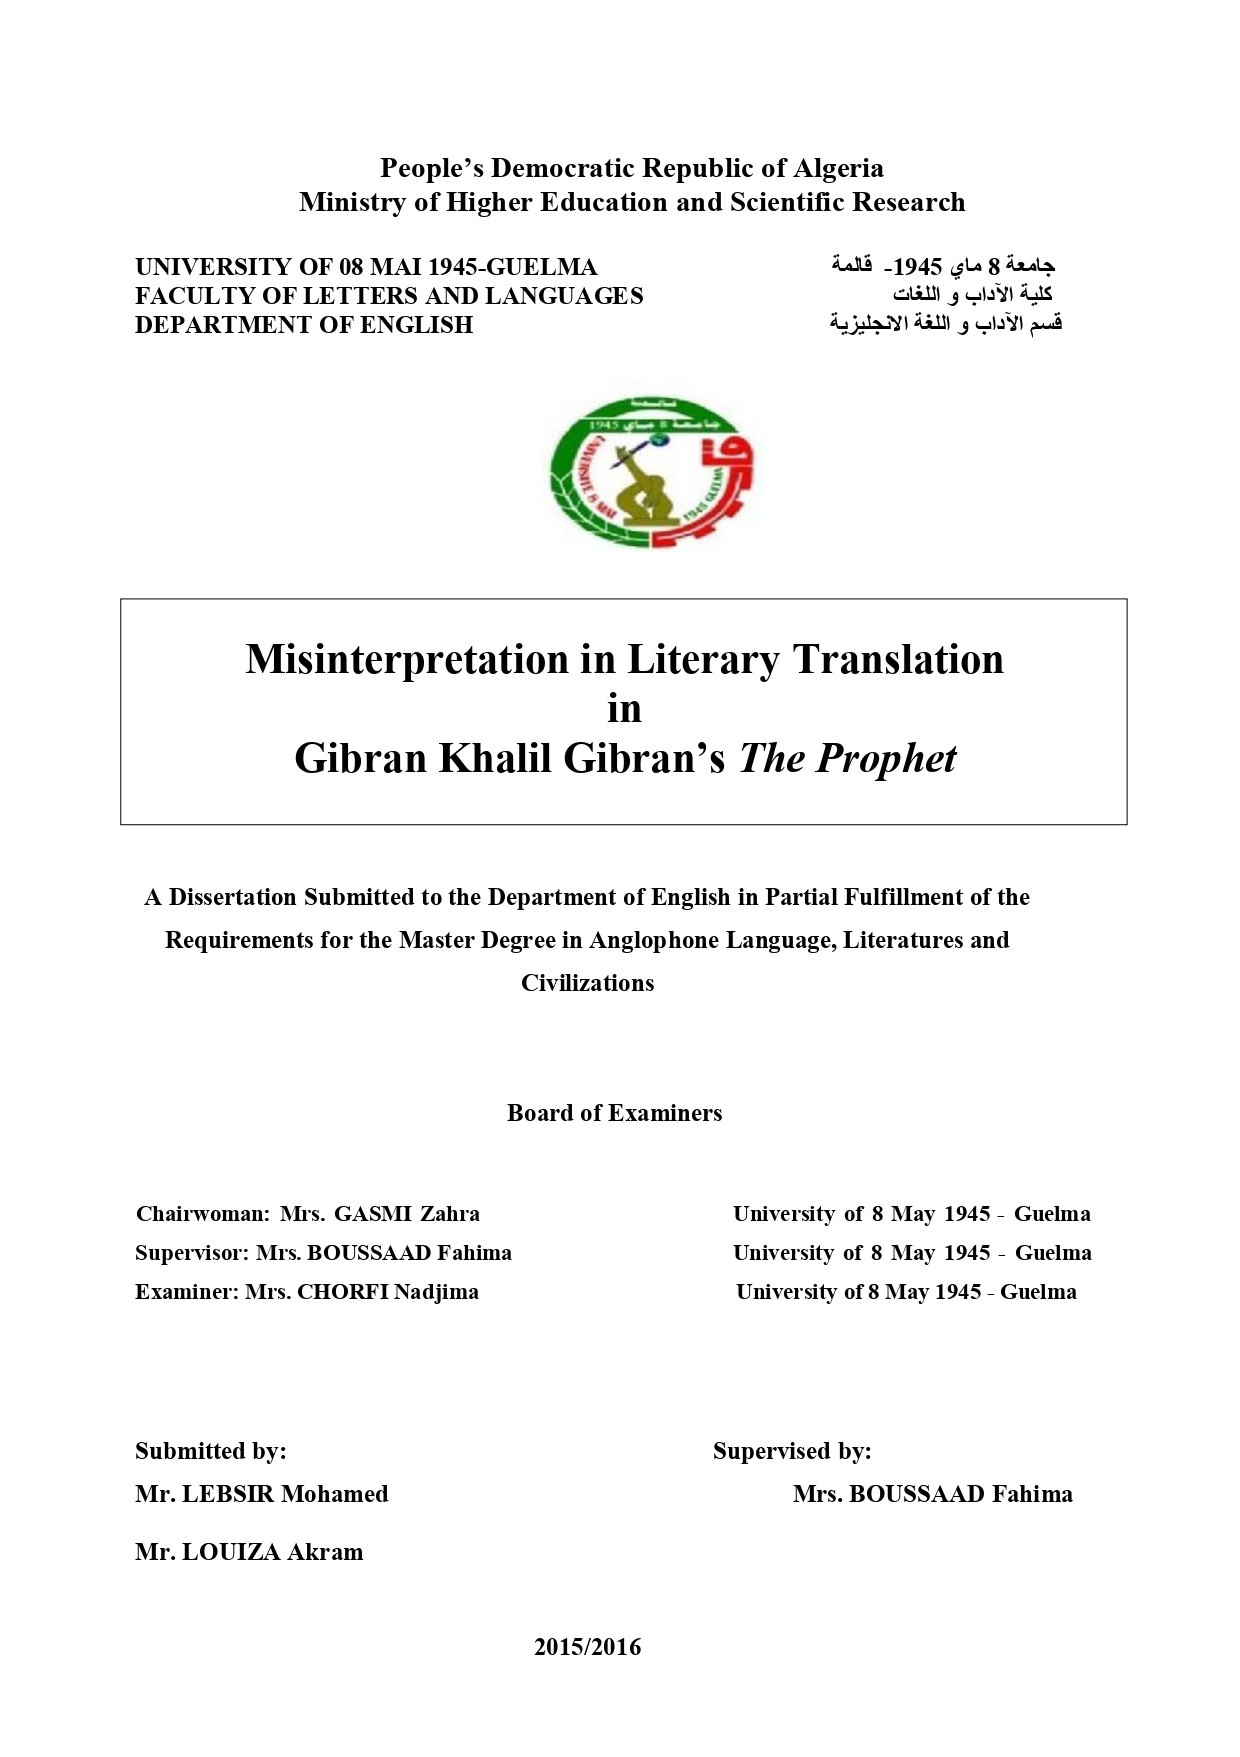 Lebsir Mohamed & Louiza Akram, "Misinterpretation in Literary Translation in Gibran Khalil Gibran’s The Prophet", The University 8 Mai 1945 (Algeria), 2016.  _______